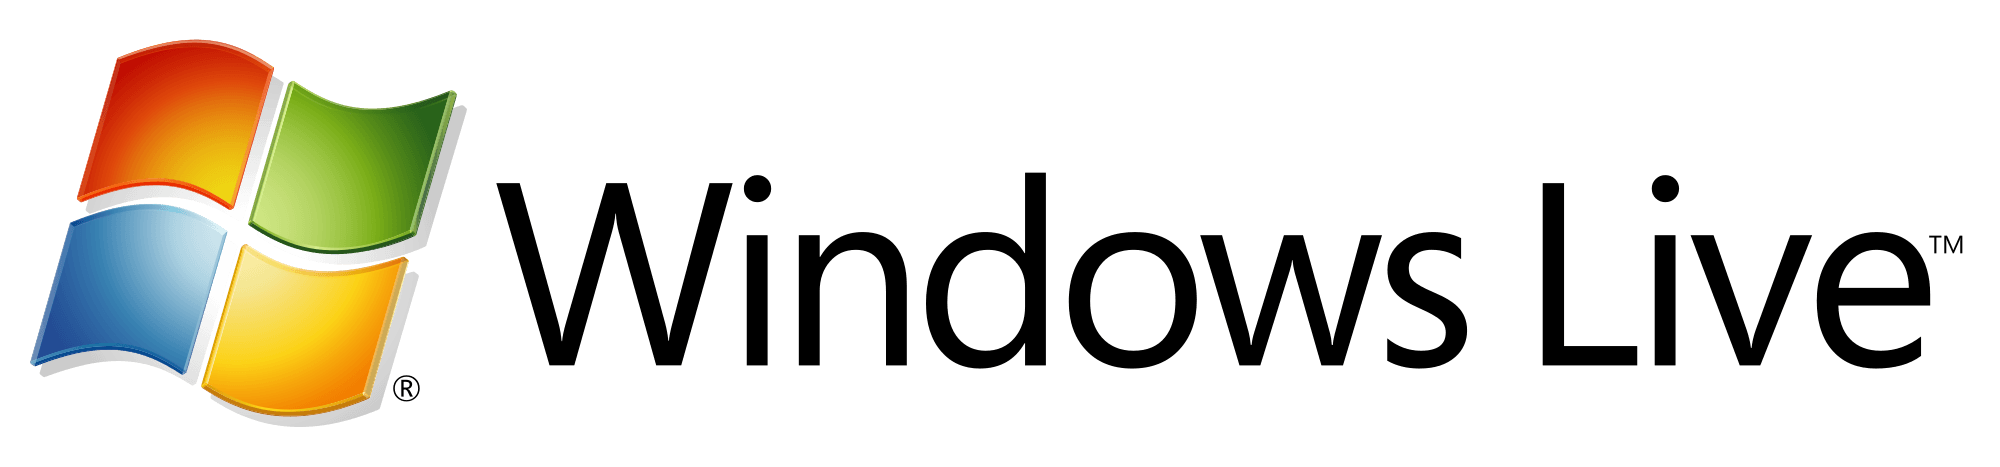 Windows Live Logo - File:Windows-live-logo.png - Wikimedia Commons